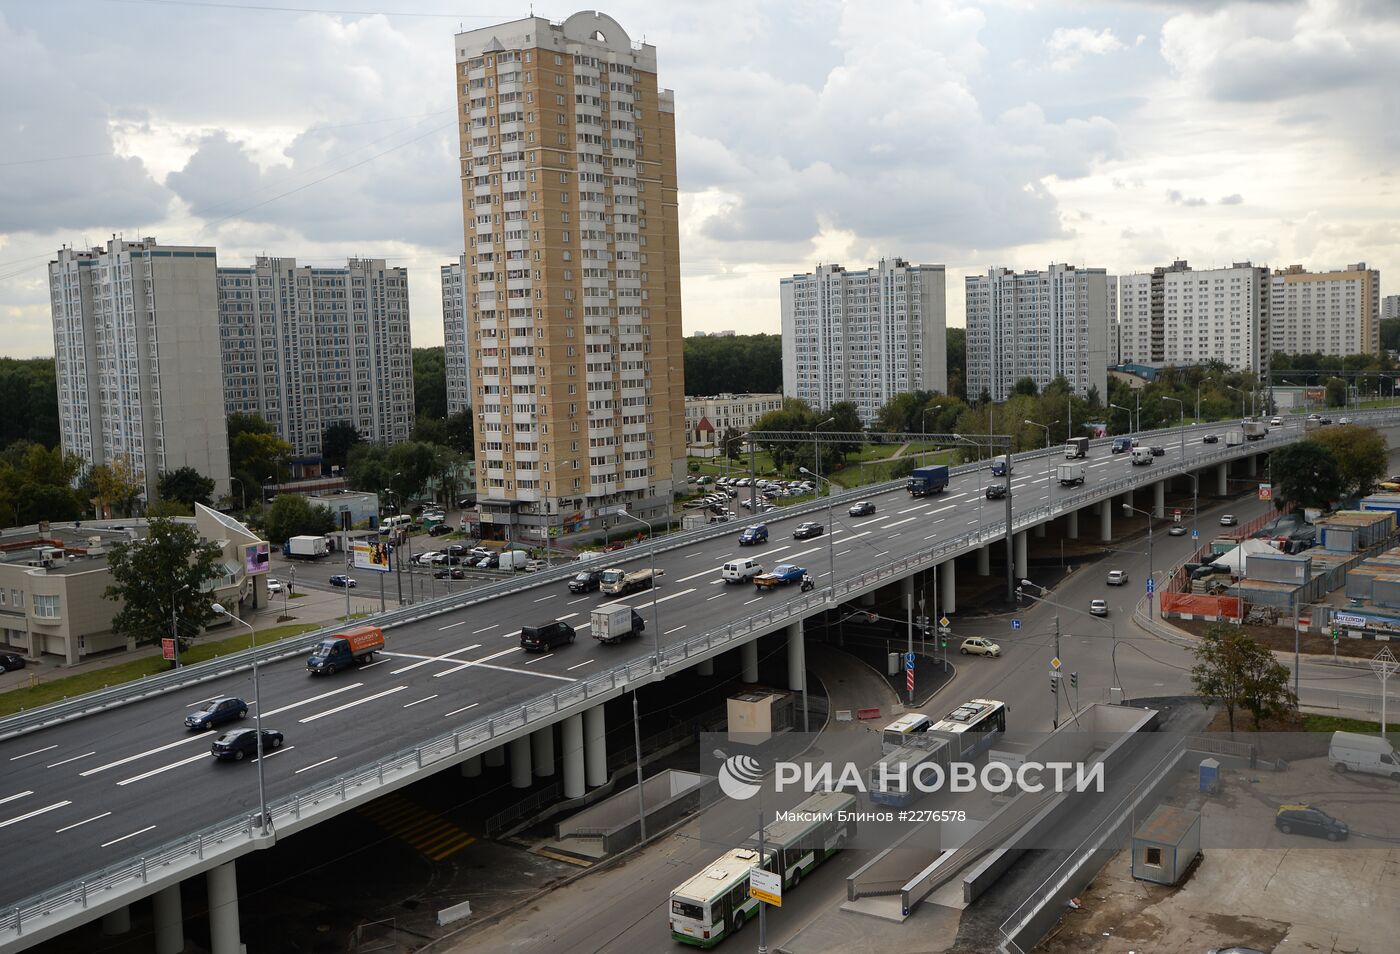 Новая эстакада открыта на Ярославском шоссе